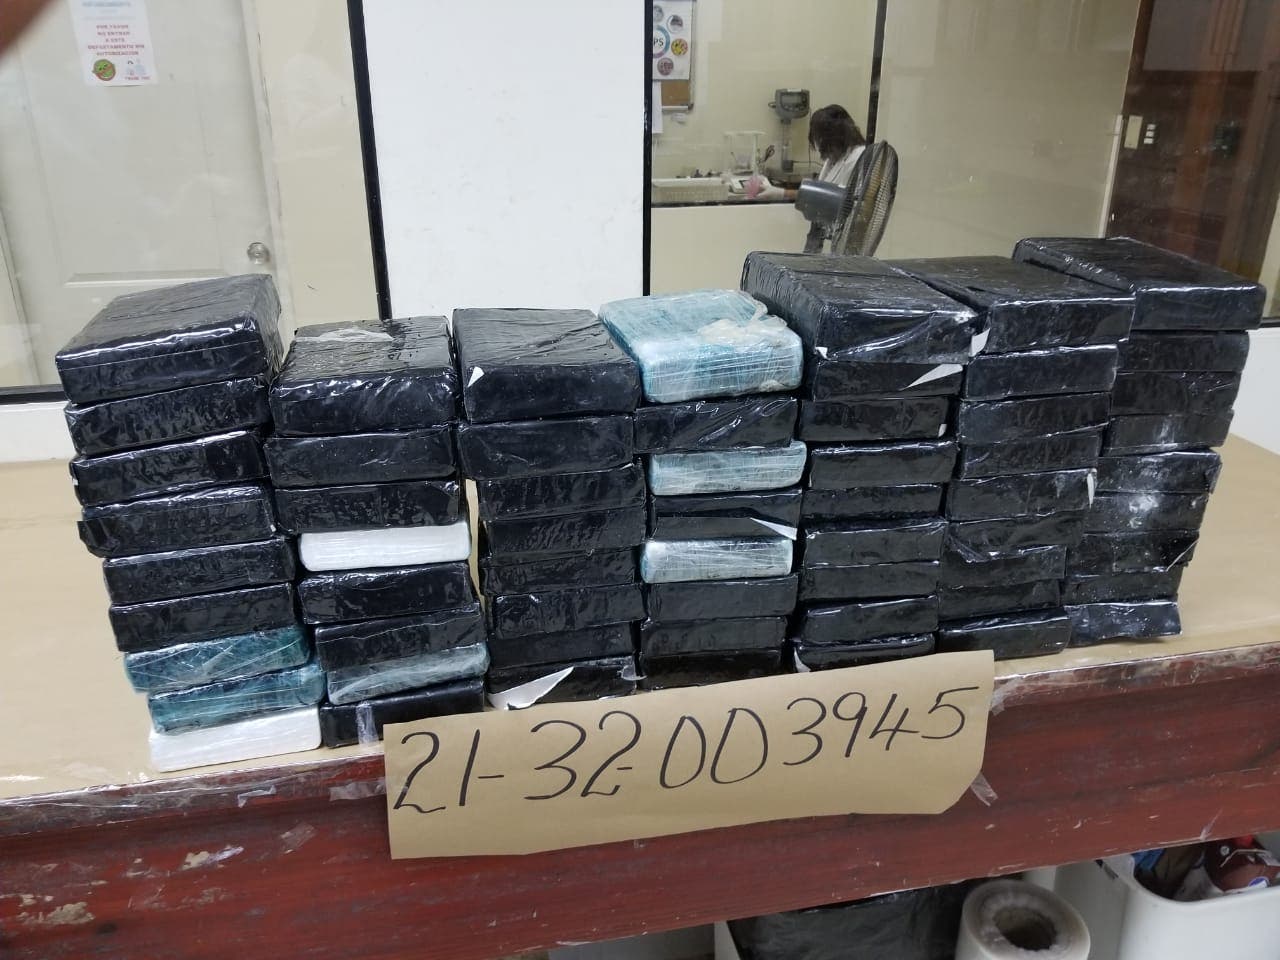 Ocupan en Puerto de Haina 60 paquetes de cocaína en sacos de azufre traídos de Colombia